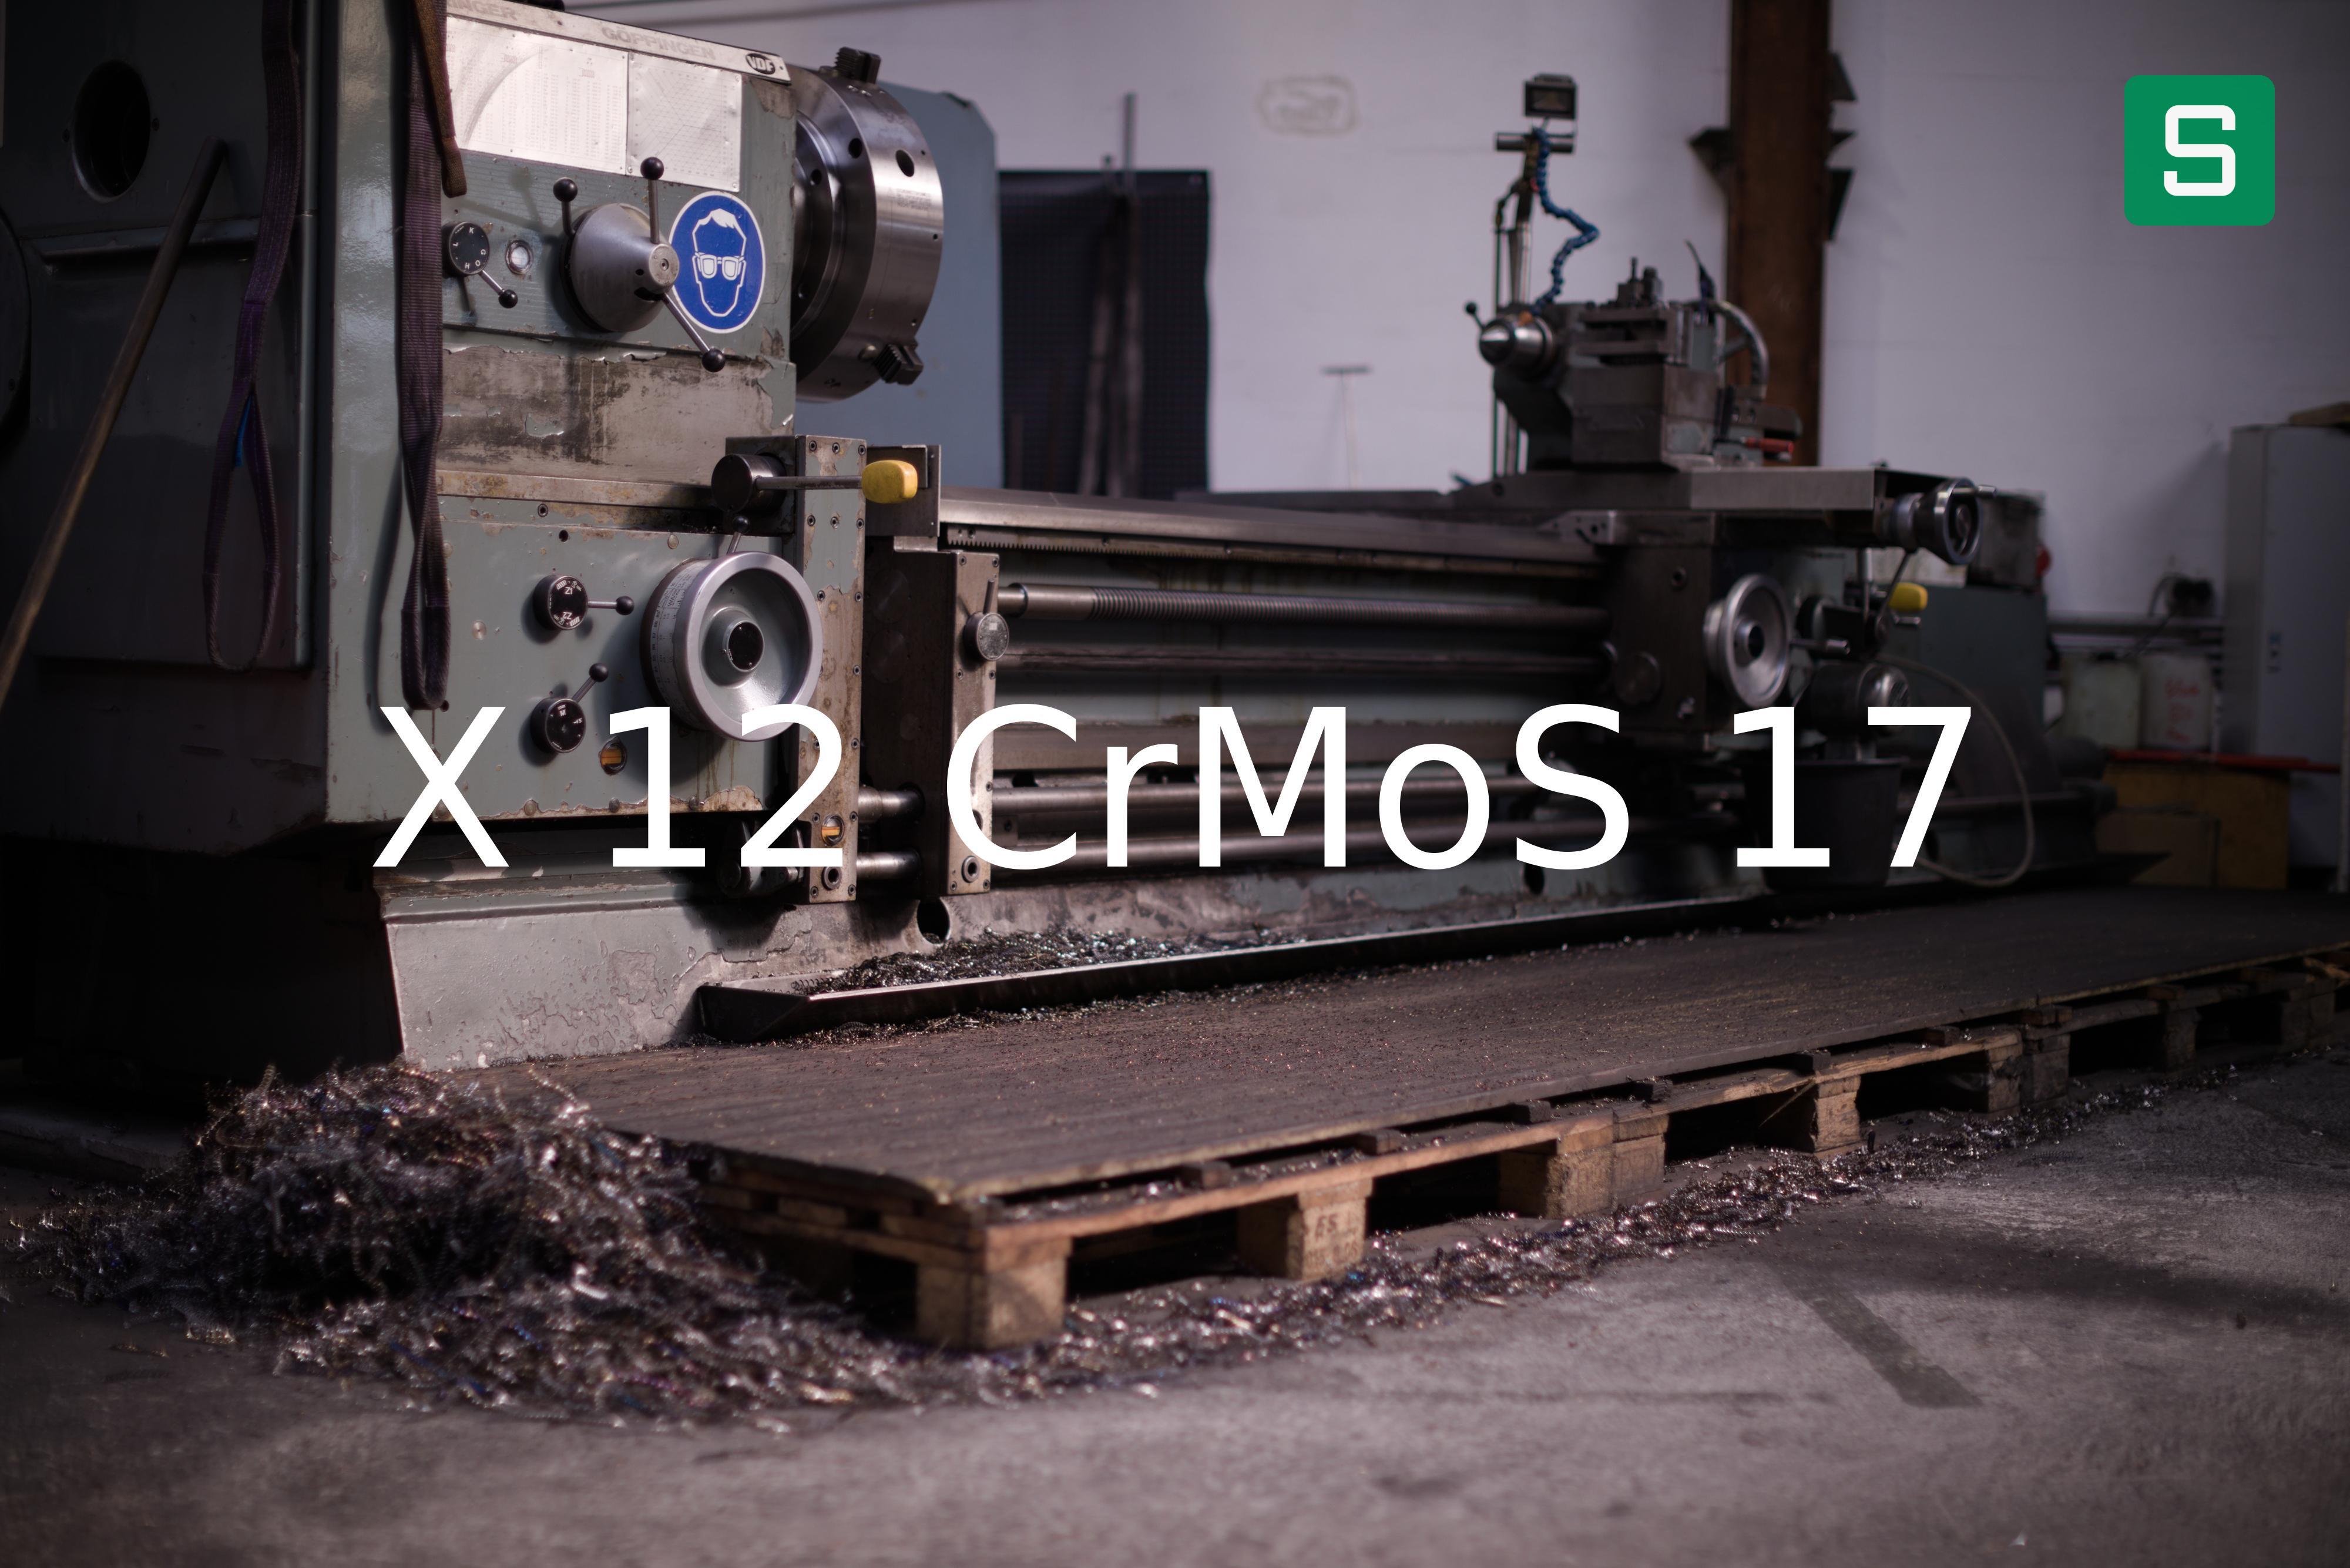 Steel Material: X 12 CrMoS 17